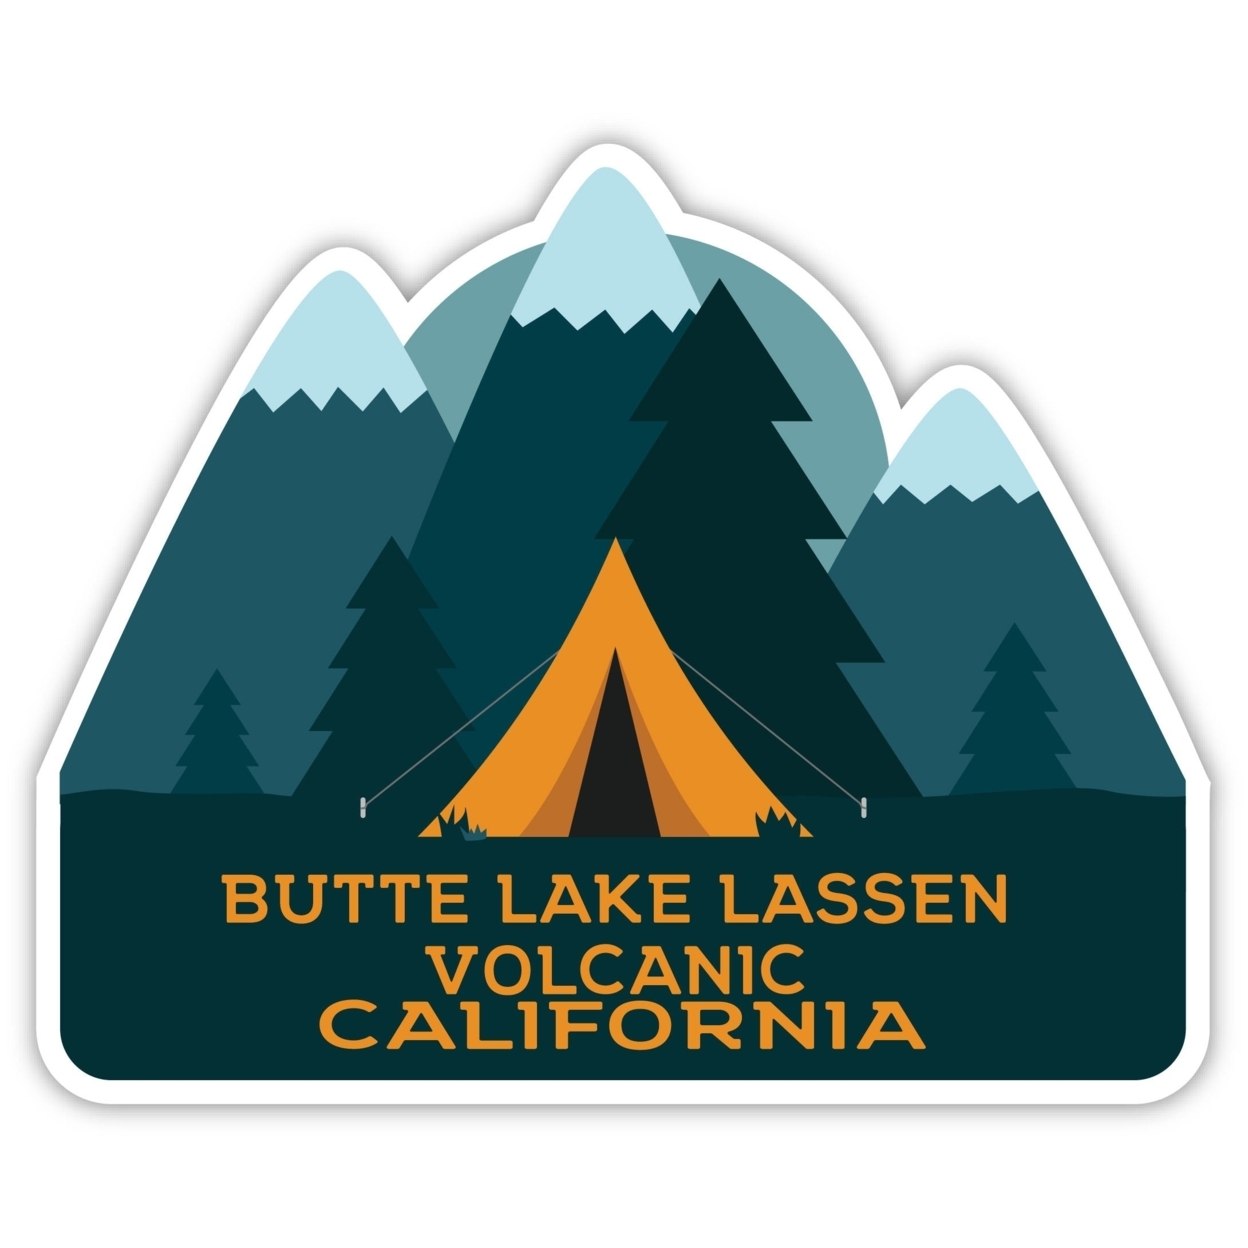 Butte Lake Lassen Volcanic California Souvenir Decorative Stickers (Choose Theme And Size) - Single Unit, 6-Inch, Tent